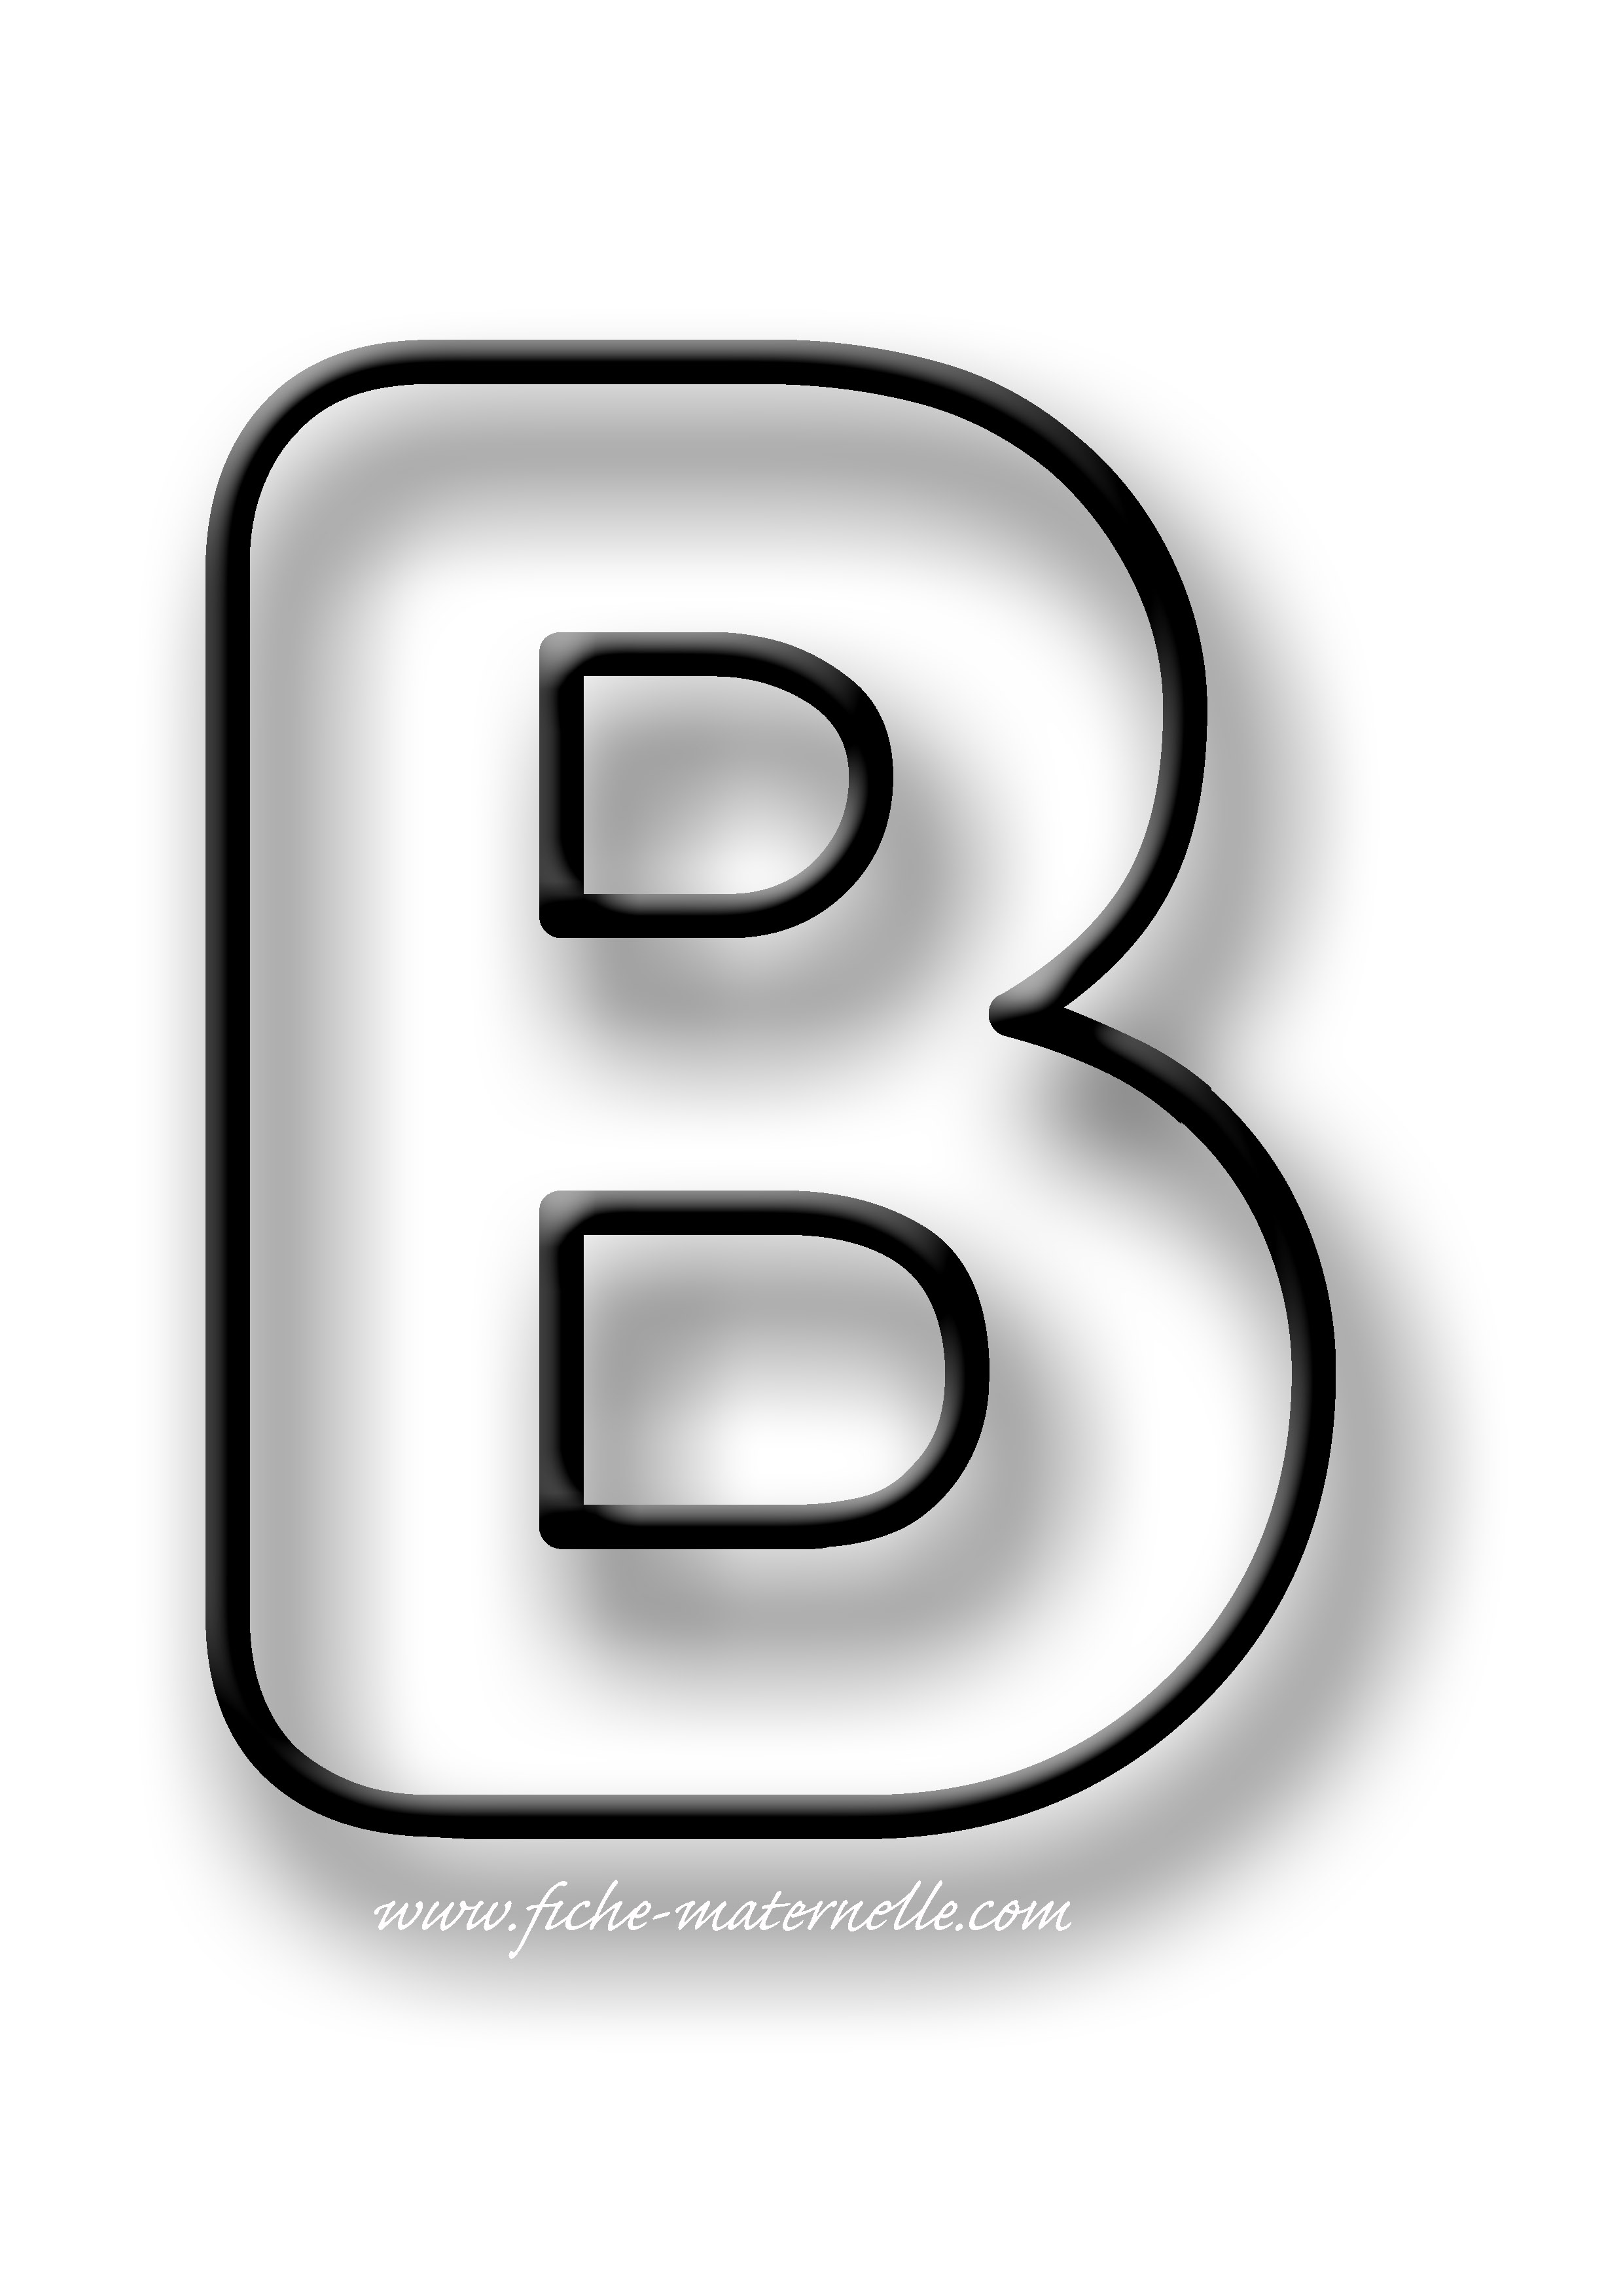 Coloriage de la lettre B